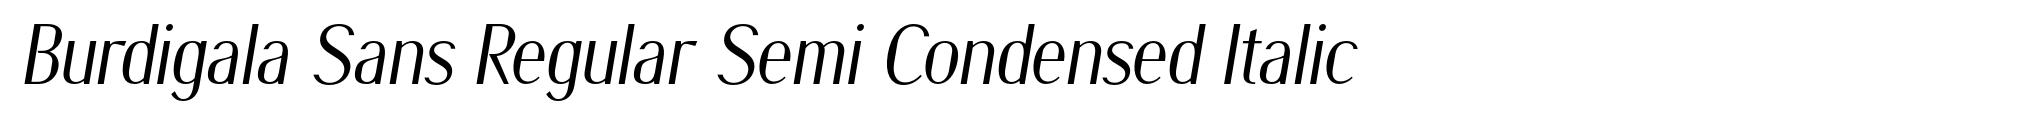 Burdigala Sans Regular Semi Condensed Italic image